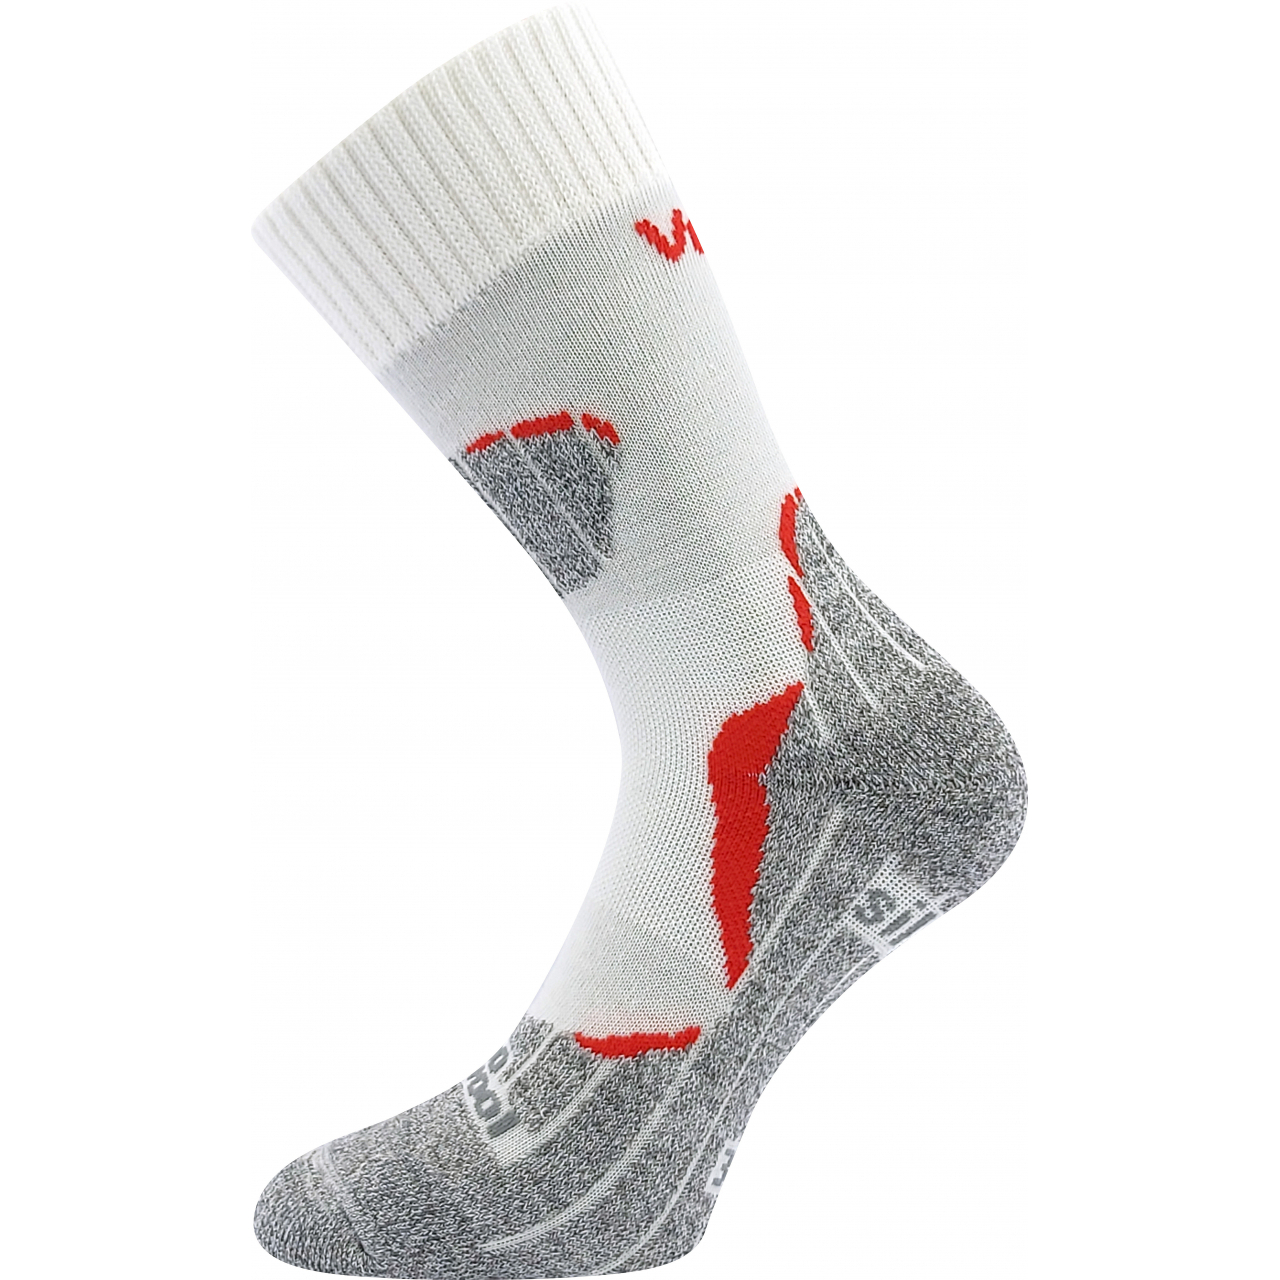 Ponožky unisex termo Voxx Dualix - bílé-šedé, 39-42